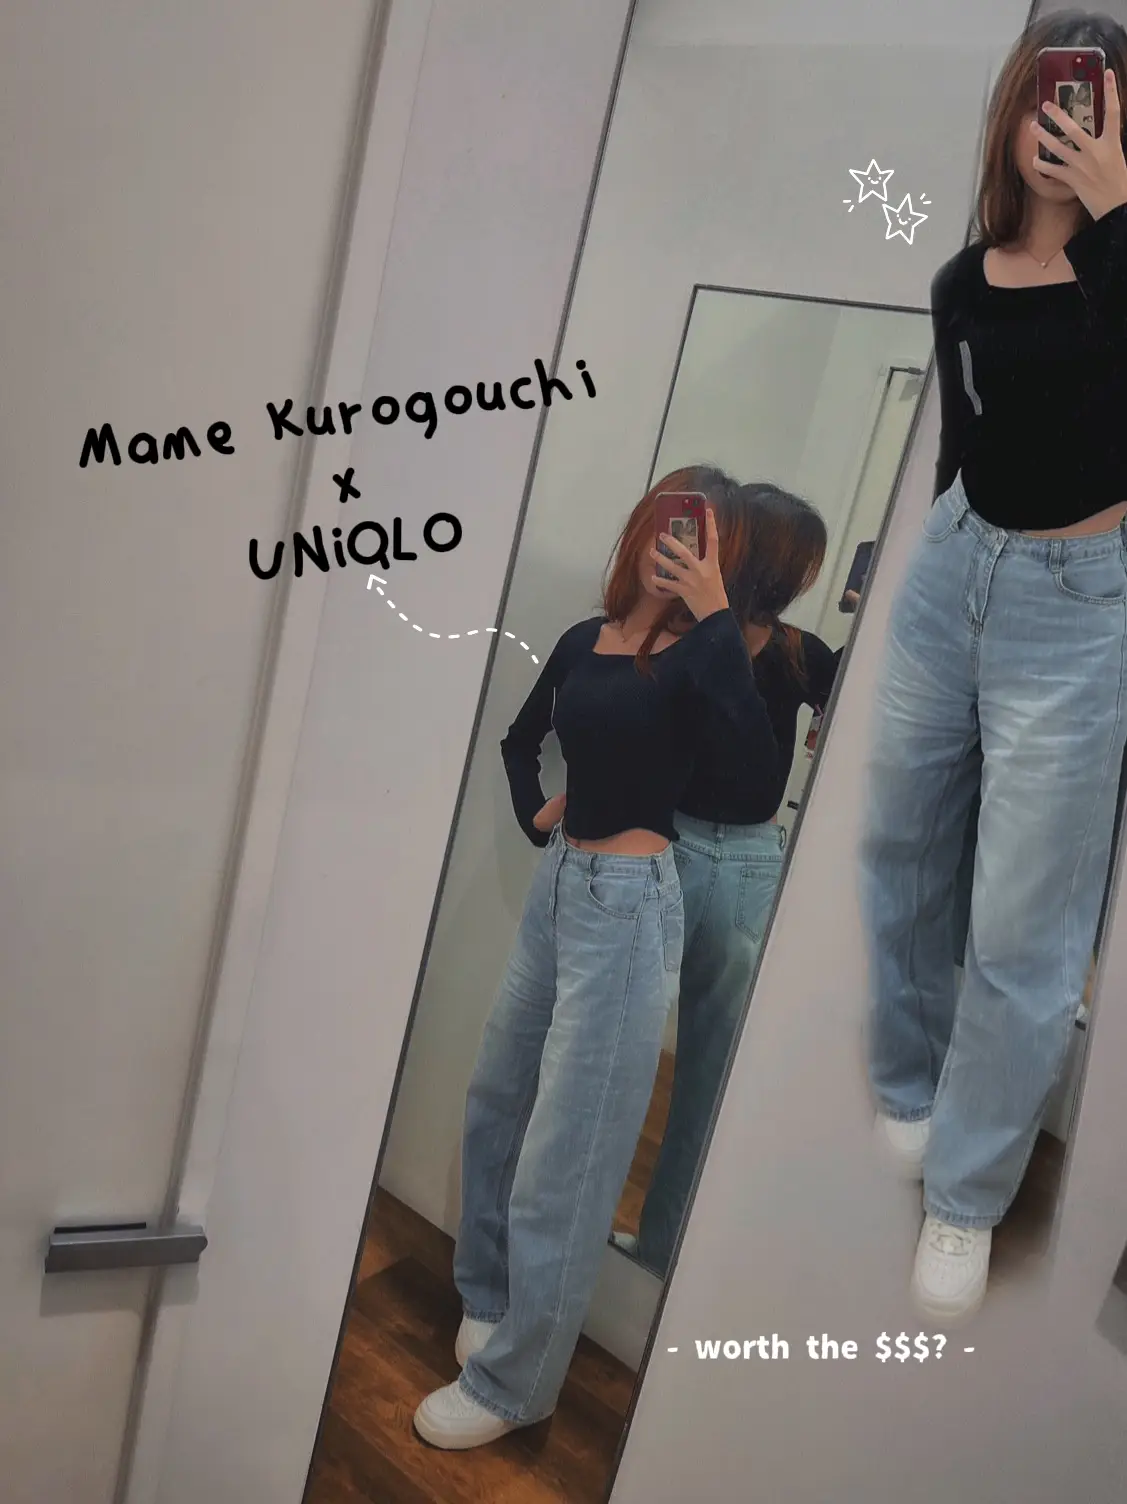 Mame Kurogouchi AIRism Ultra Seamless Shorts